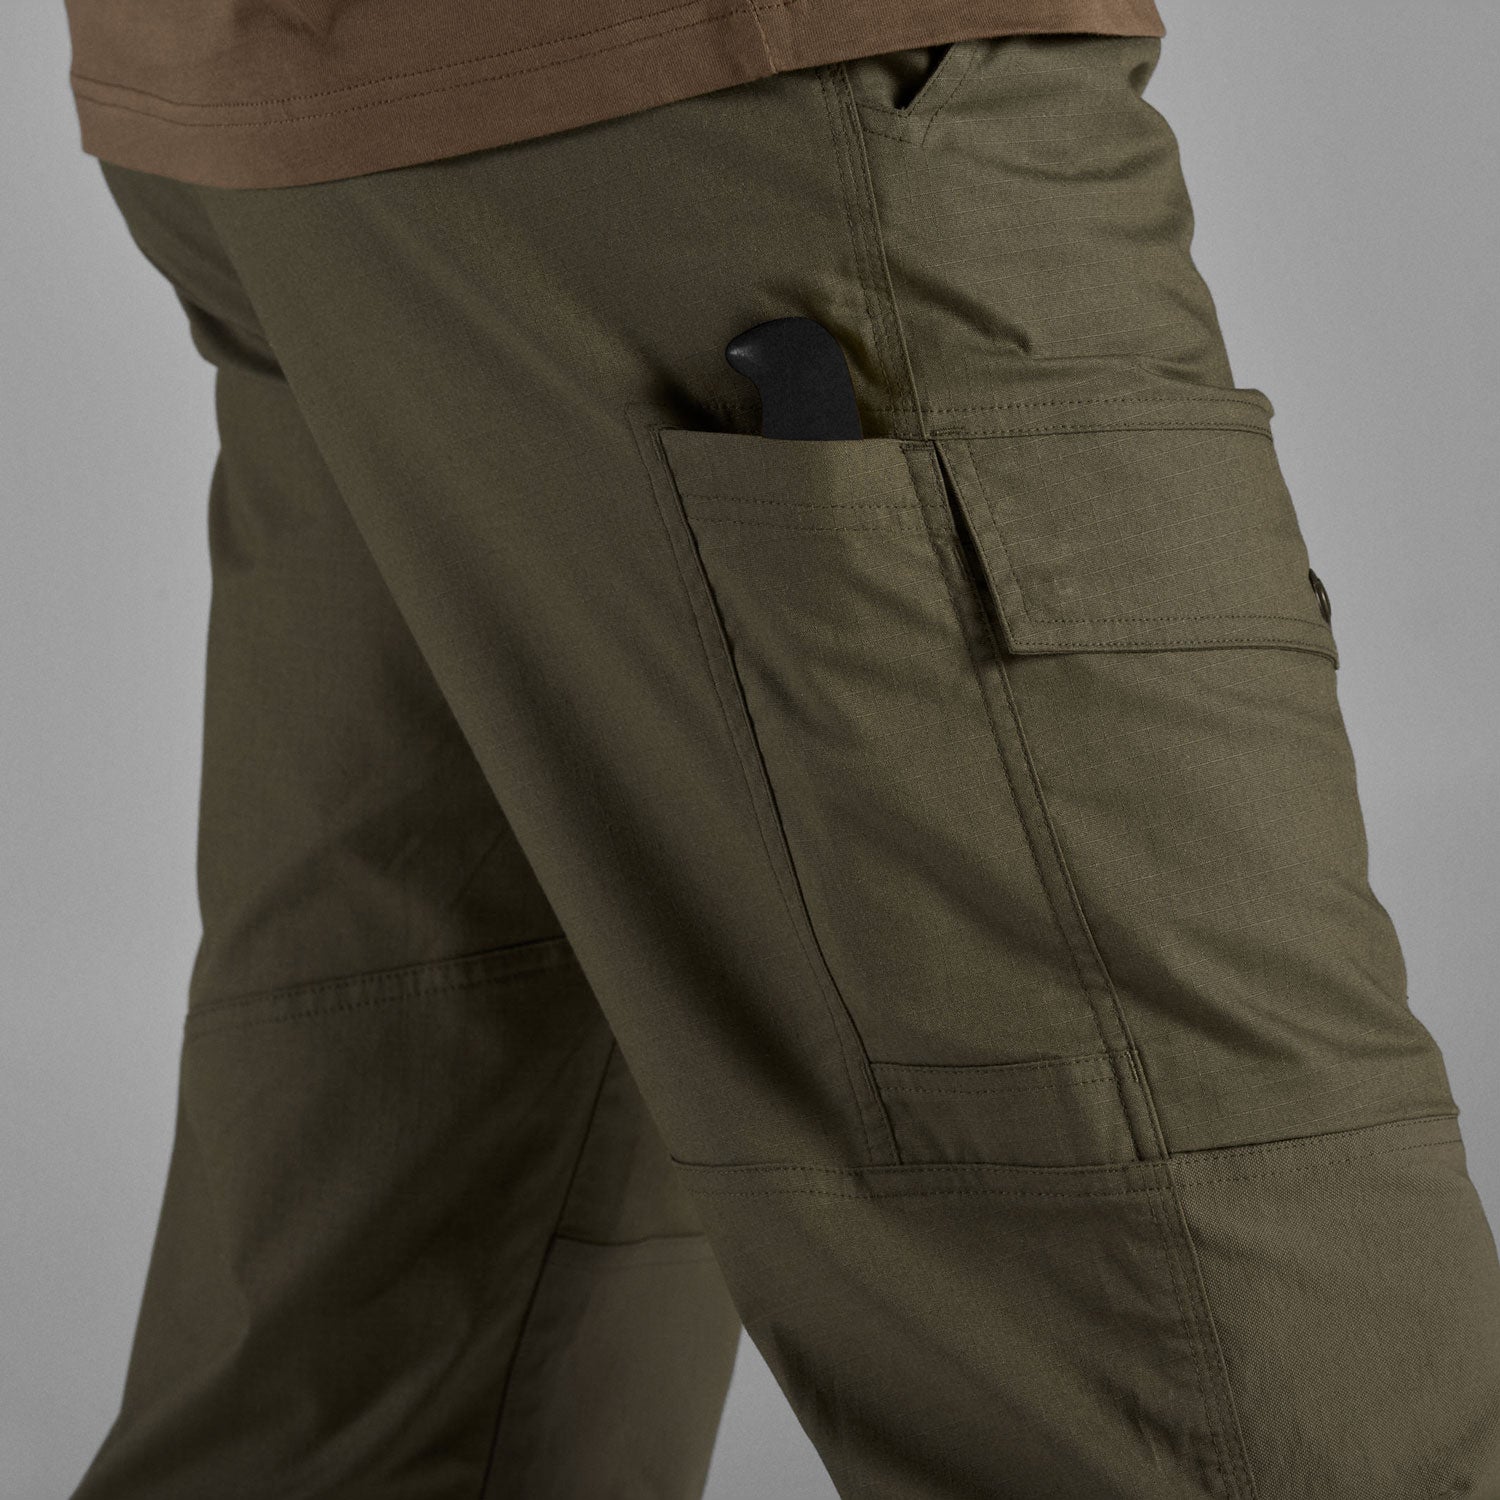 Harkila Pro Hunter Light Trousers | Just Like The Original Pro Hunter But  Now Lightweight